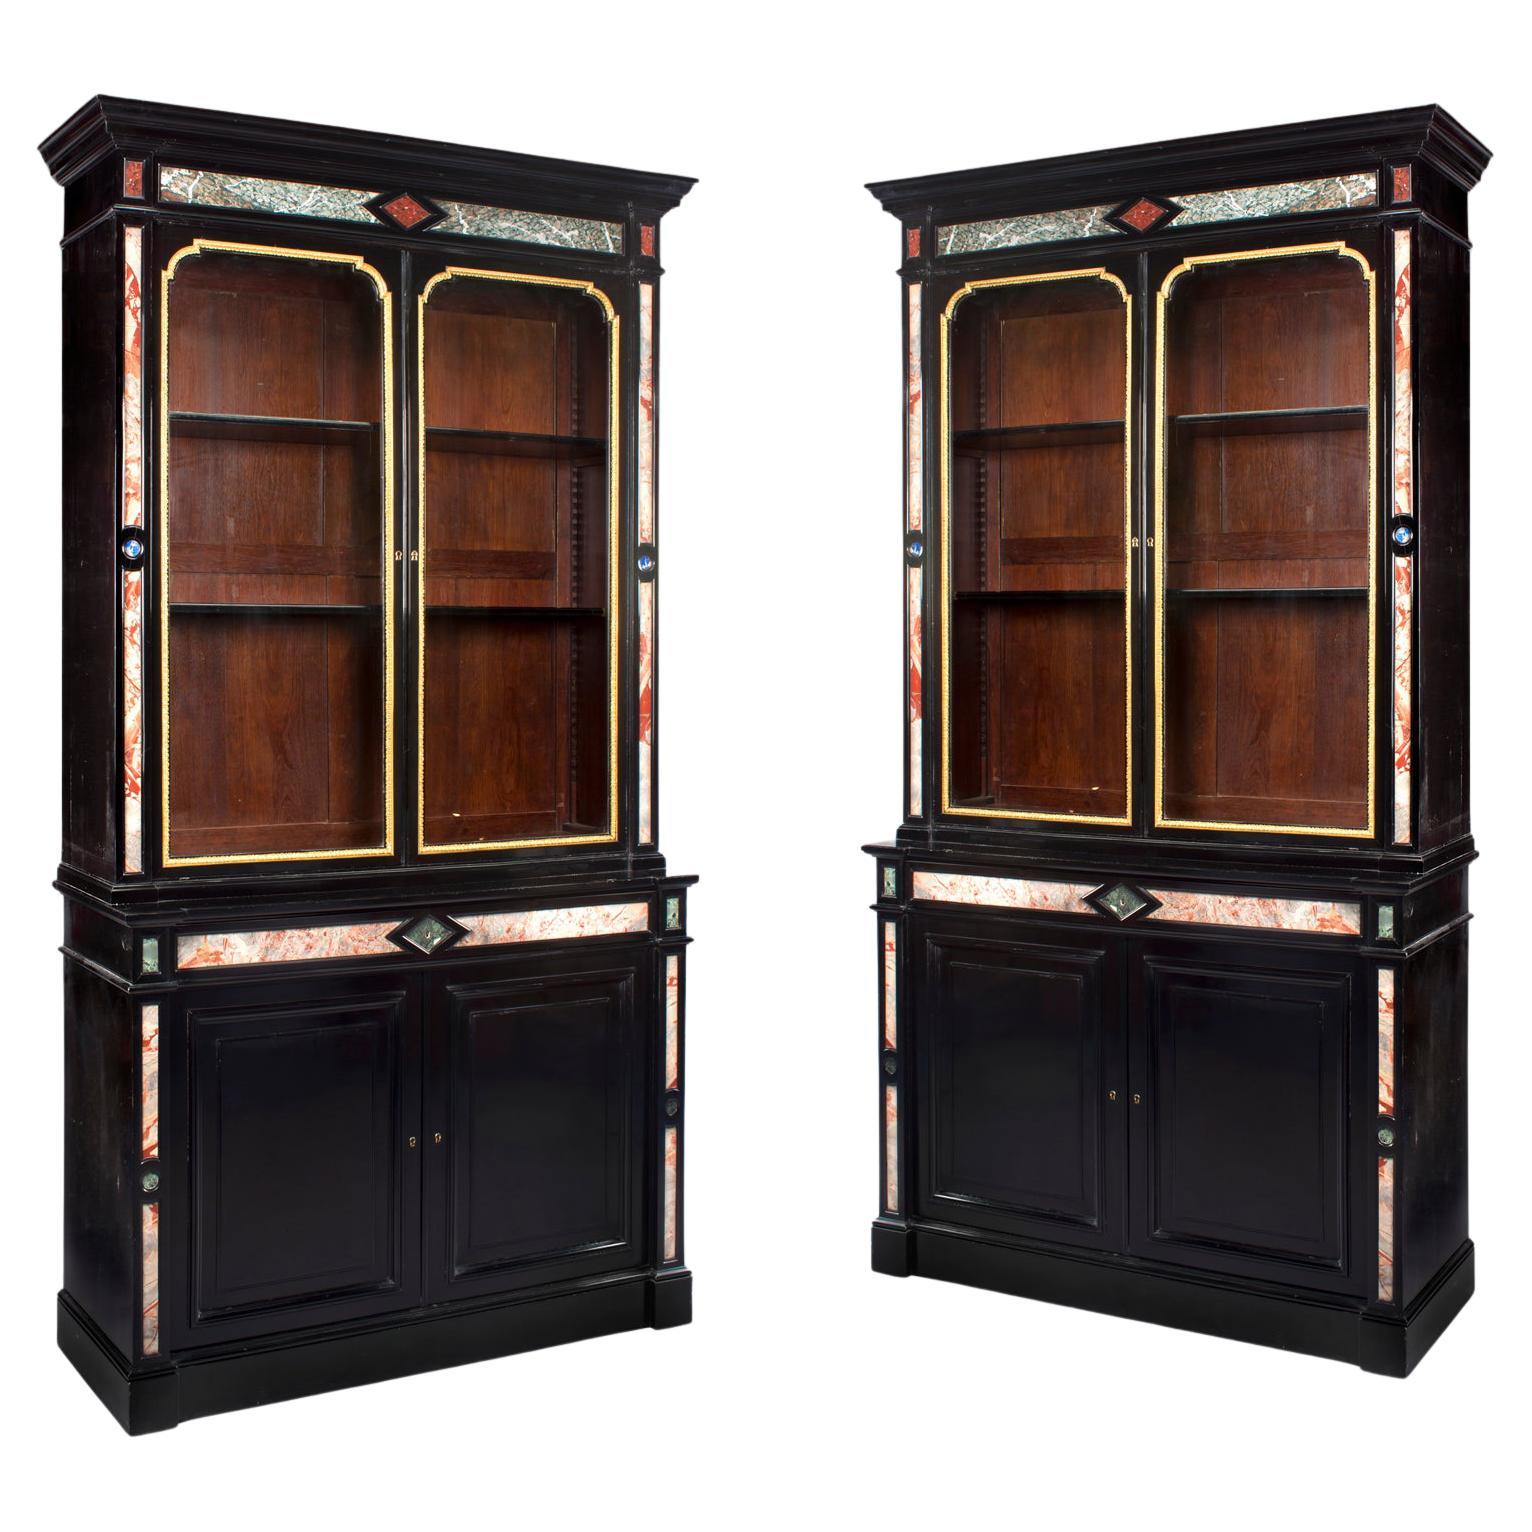 A Pair of Napoleon III Pietre Dure Bookcases